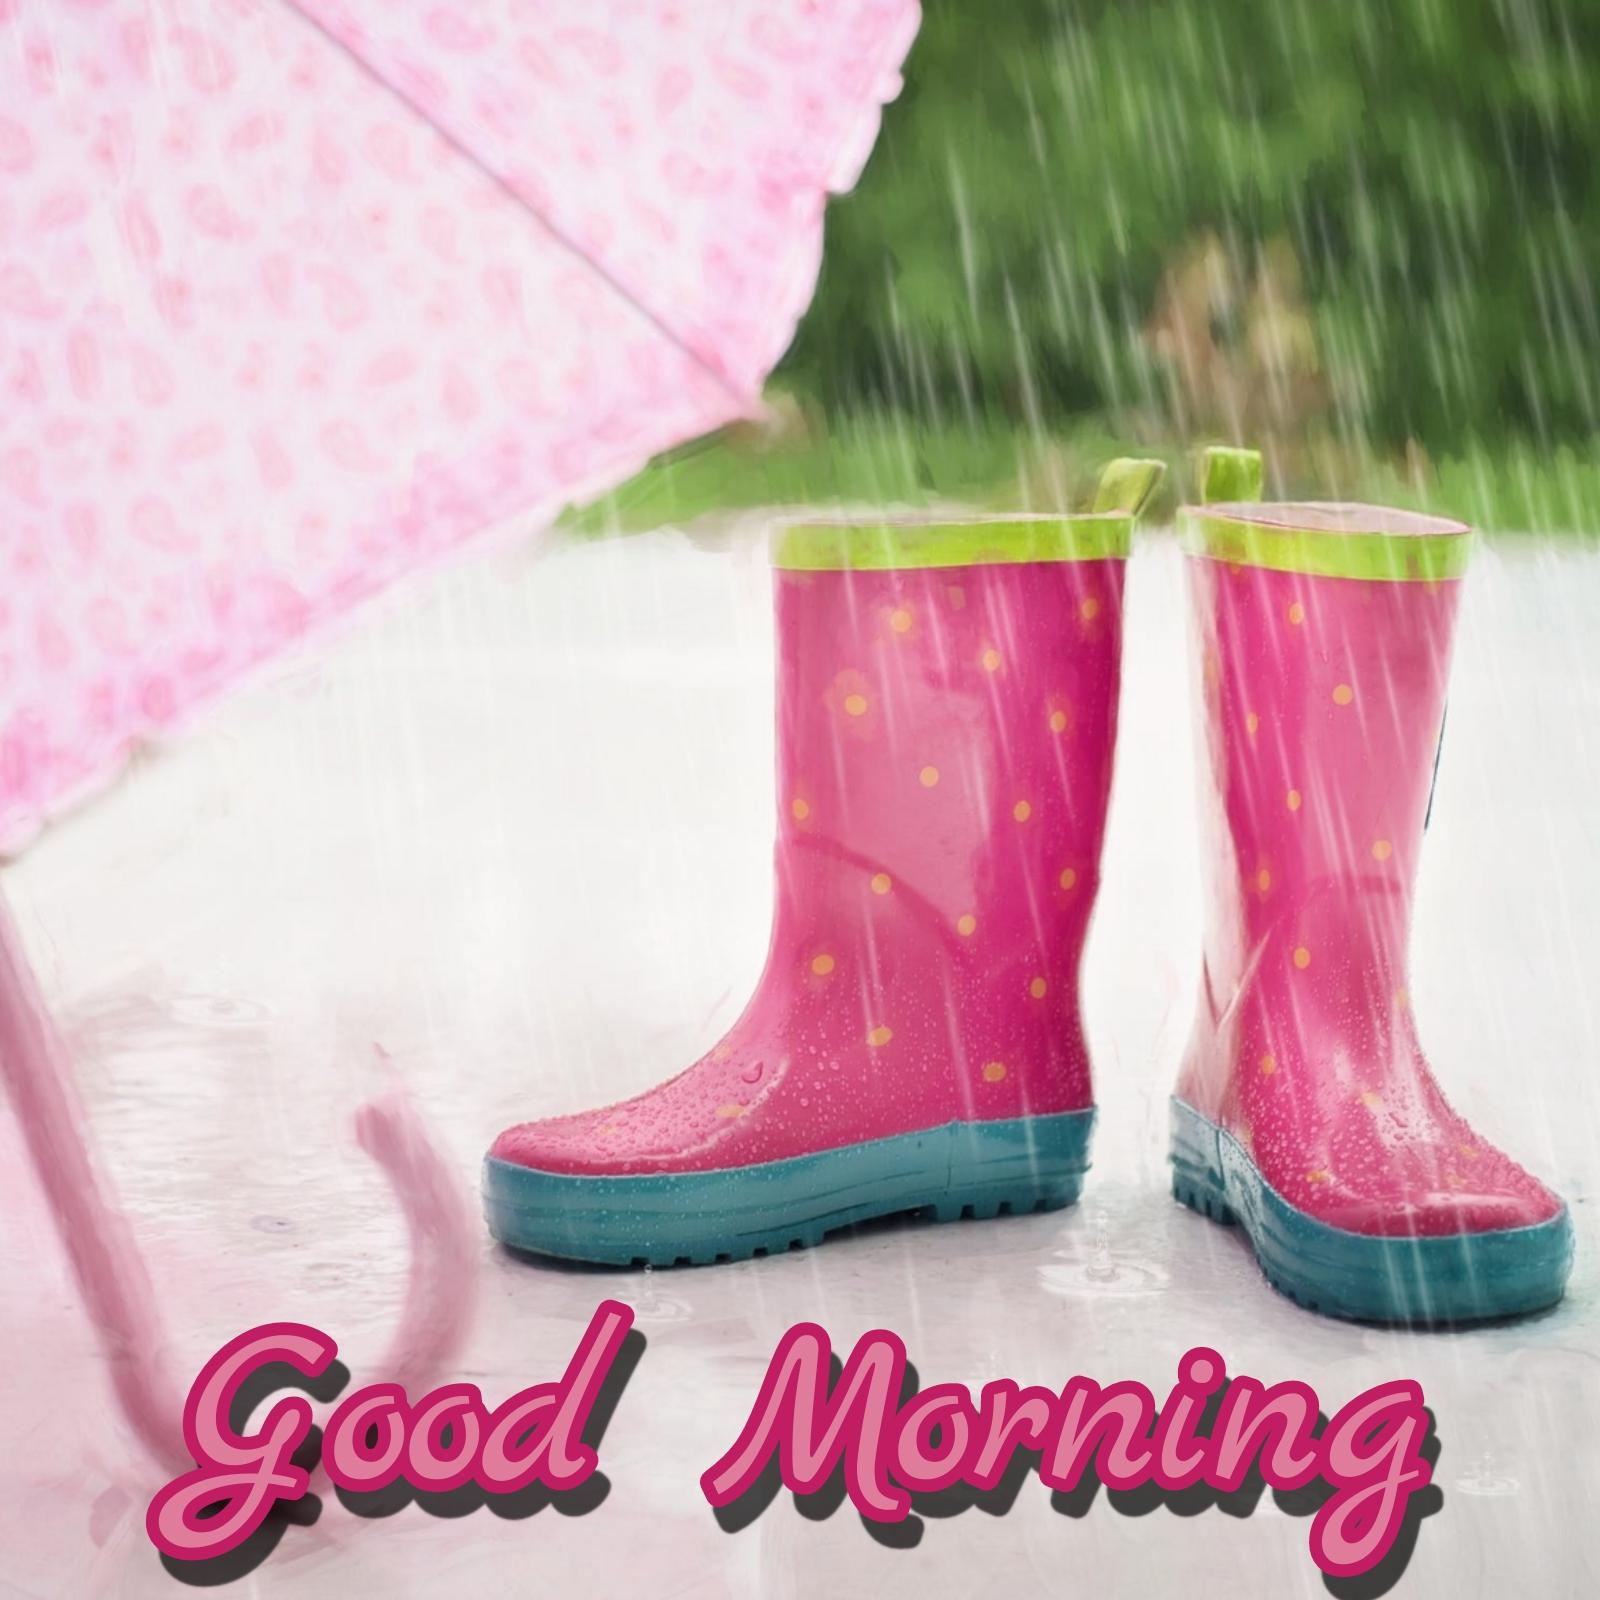 Good Morning Rain Images With Umbrella